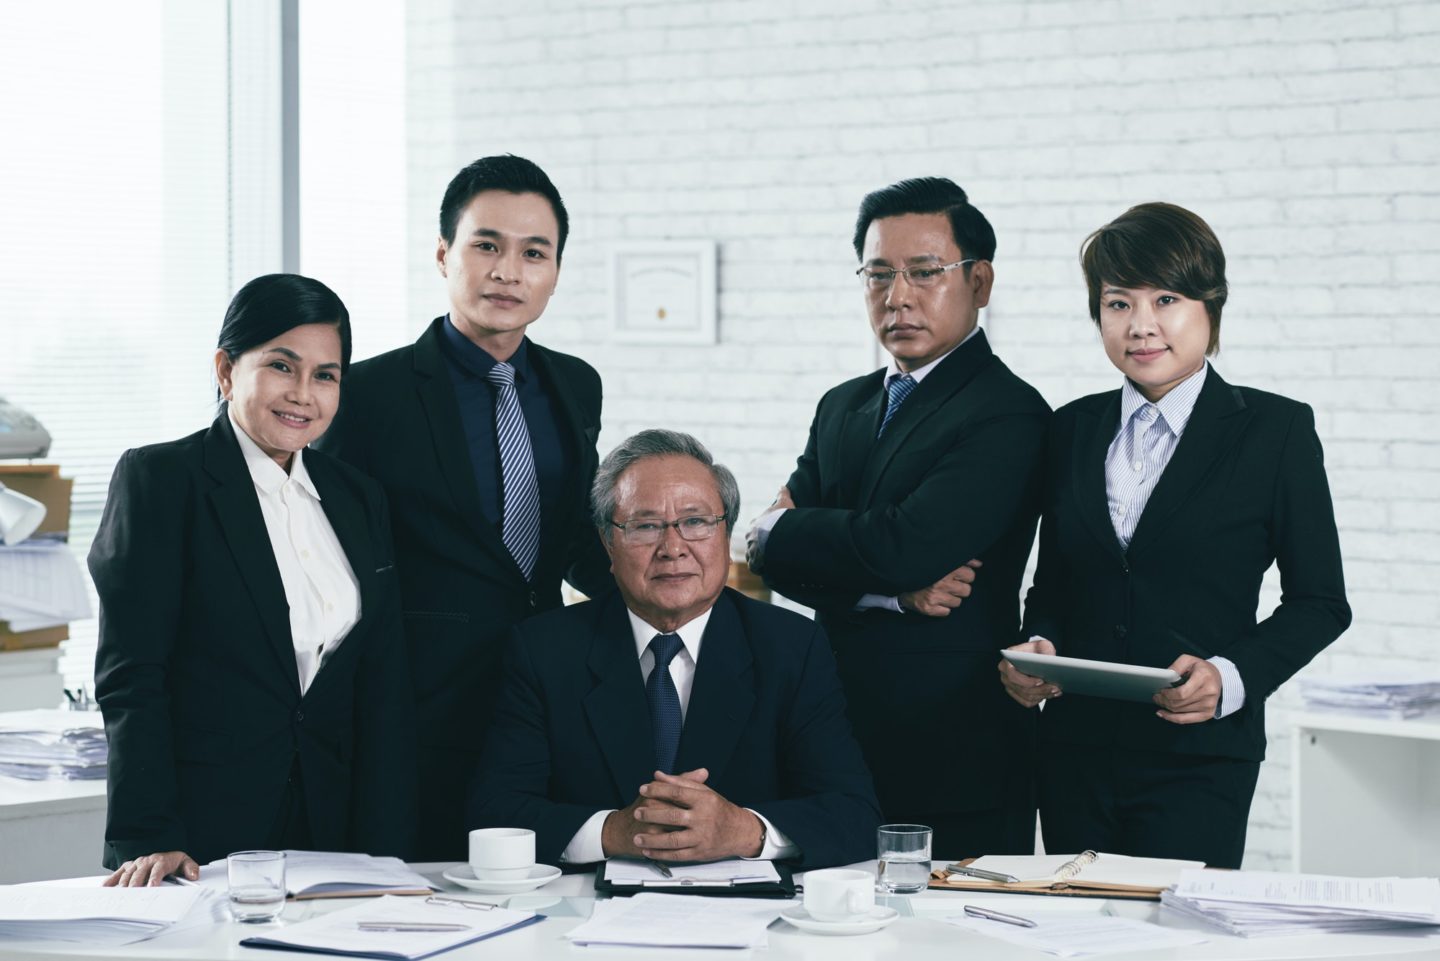 Vietnamese team of lawyers